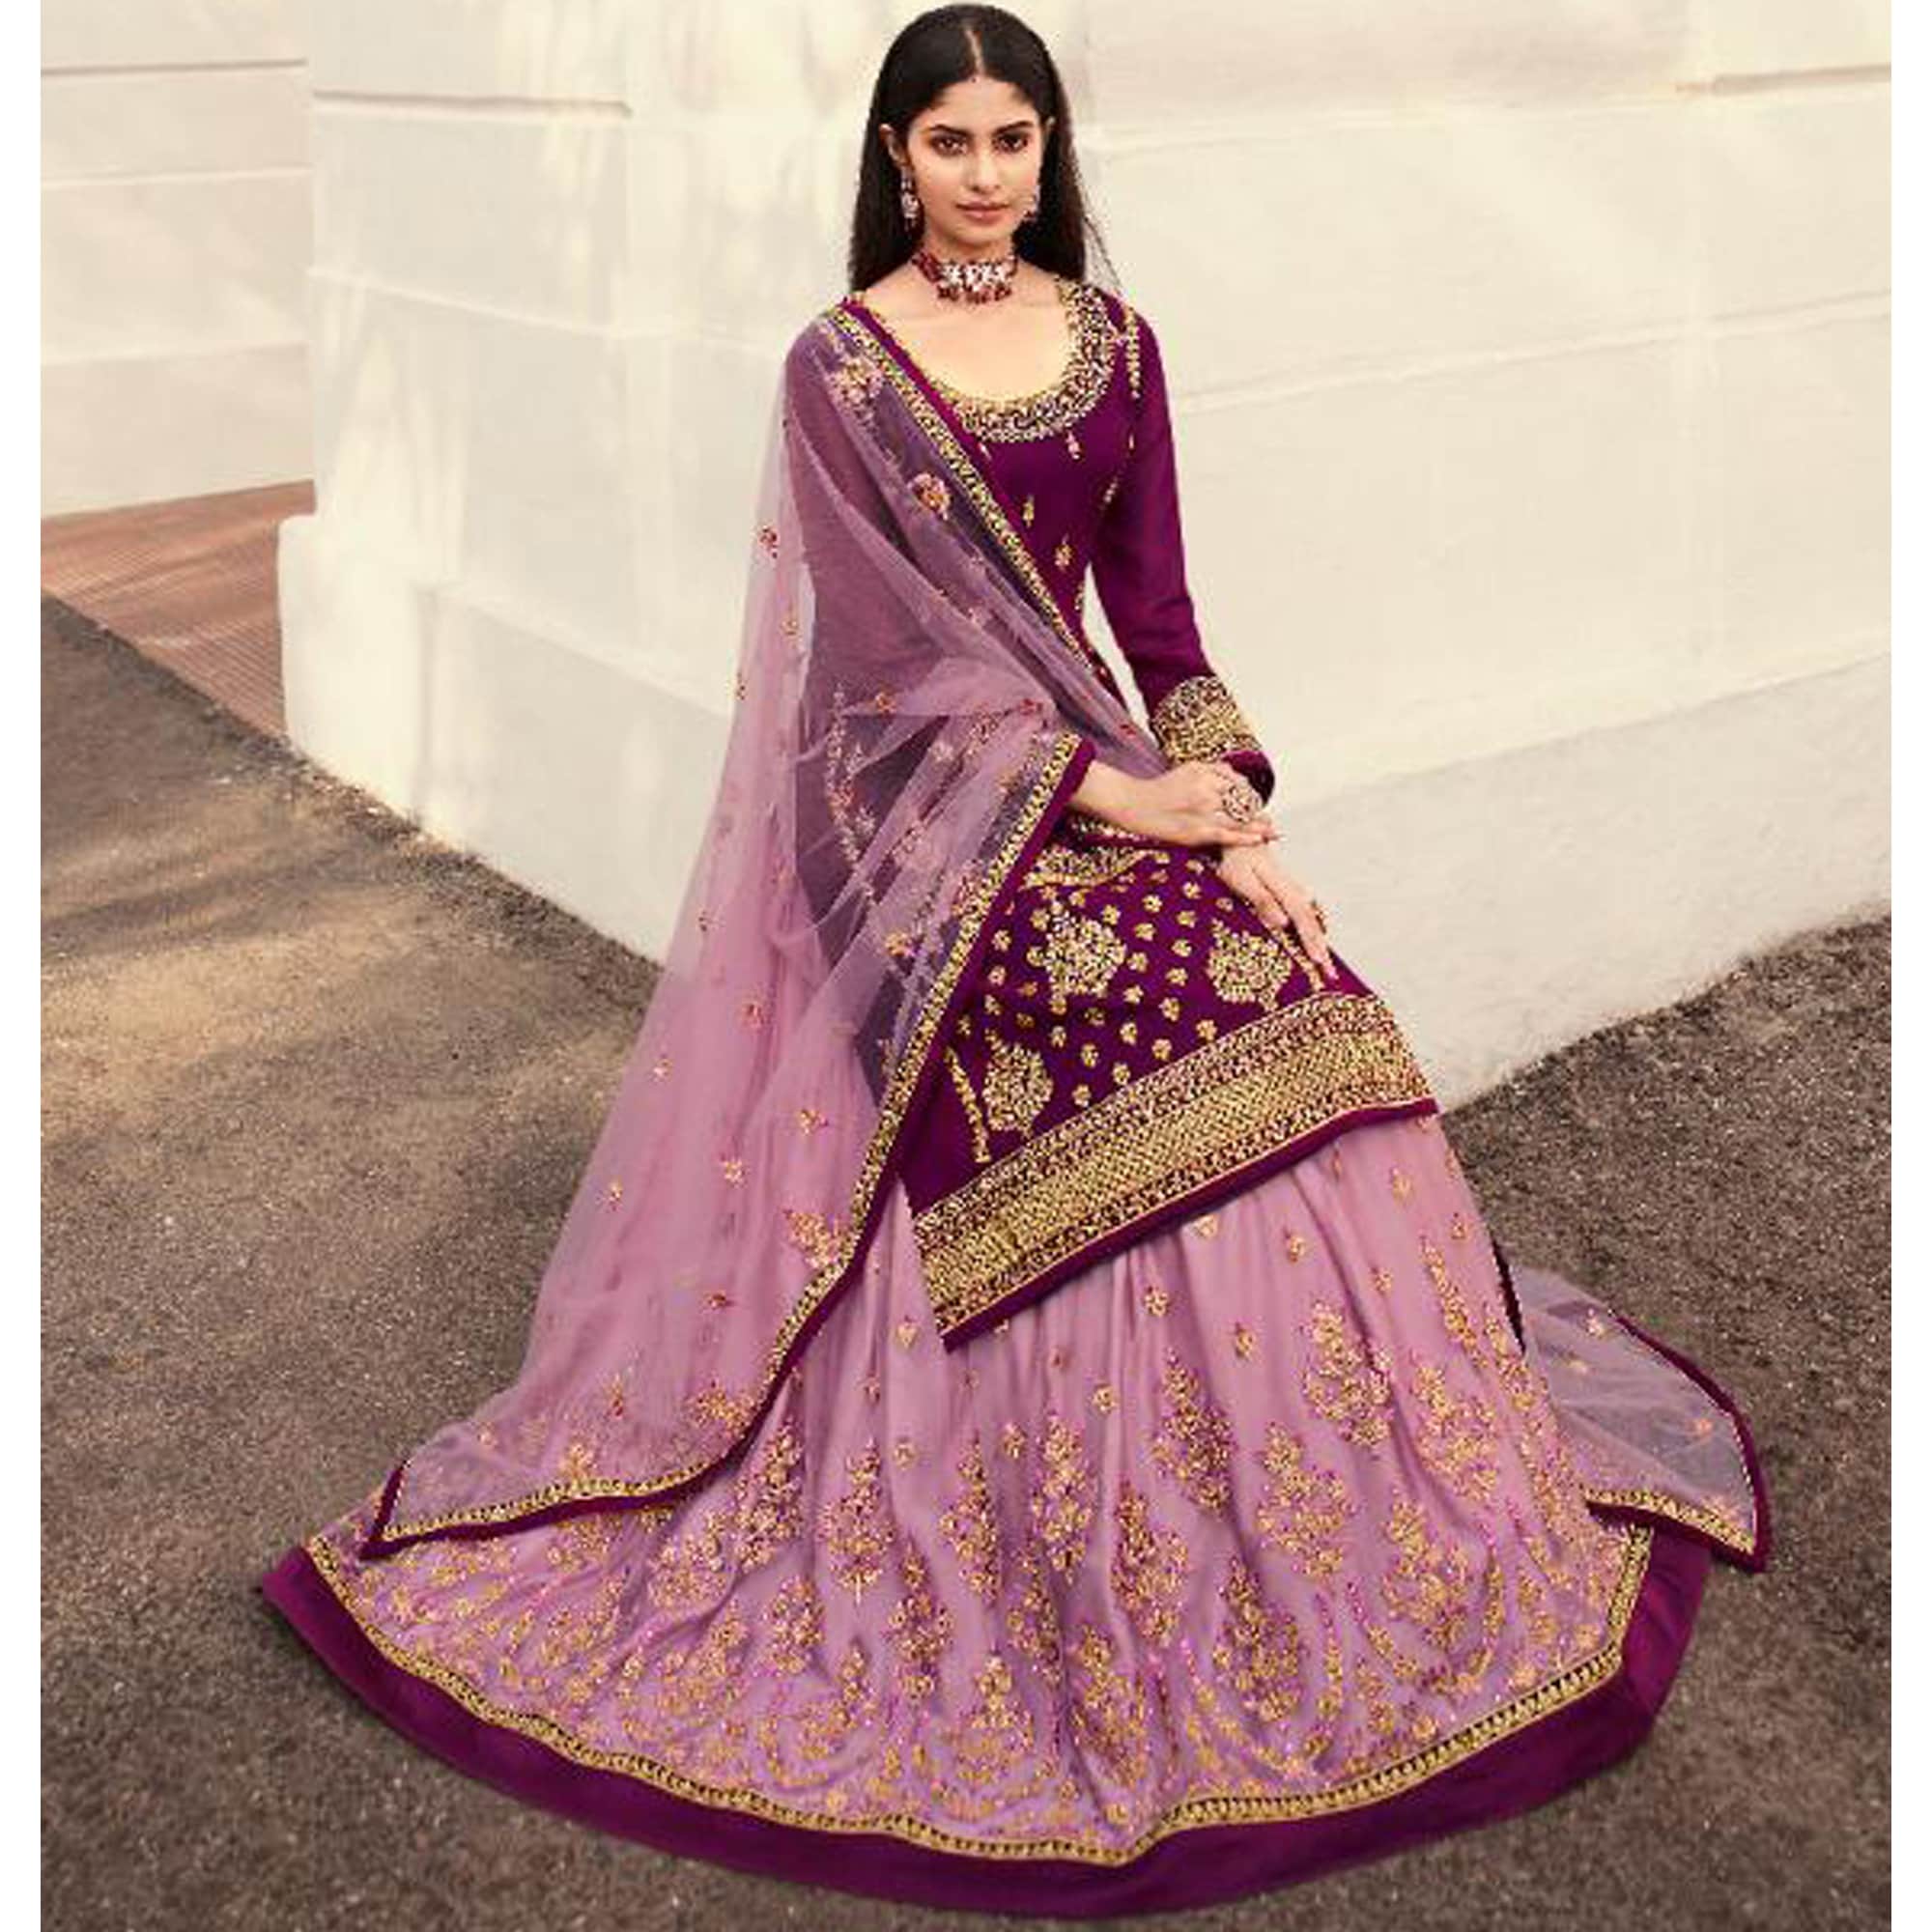 Stunning bridal lehengas from Pakistani designers